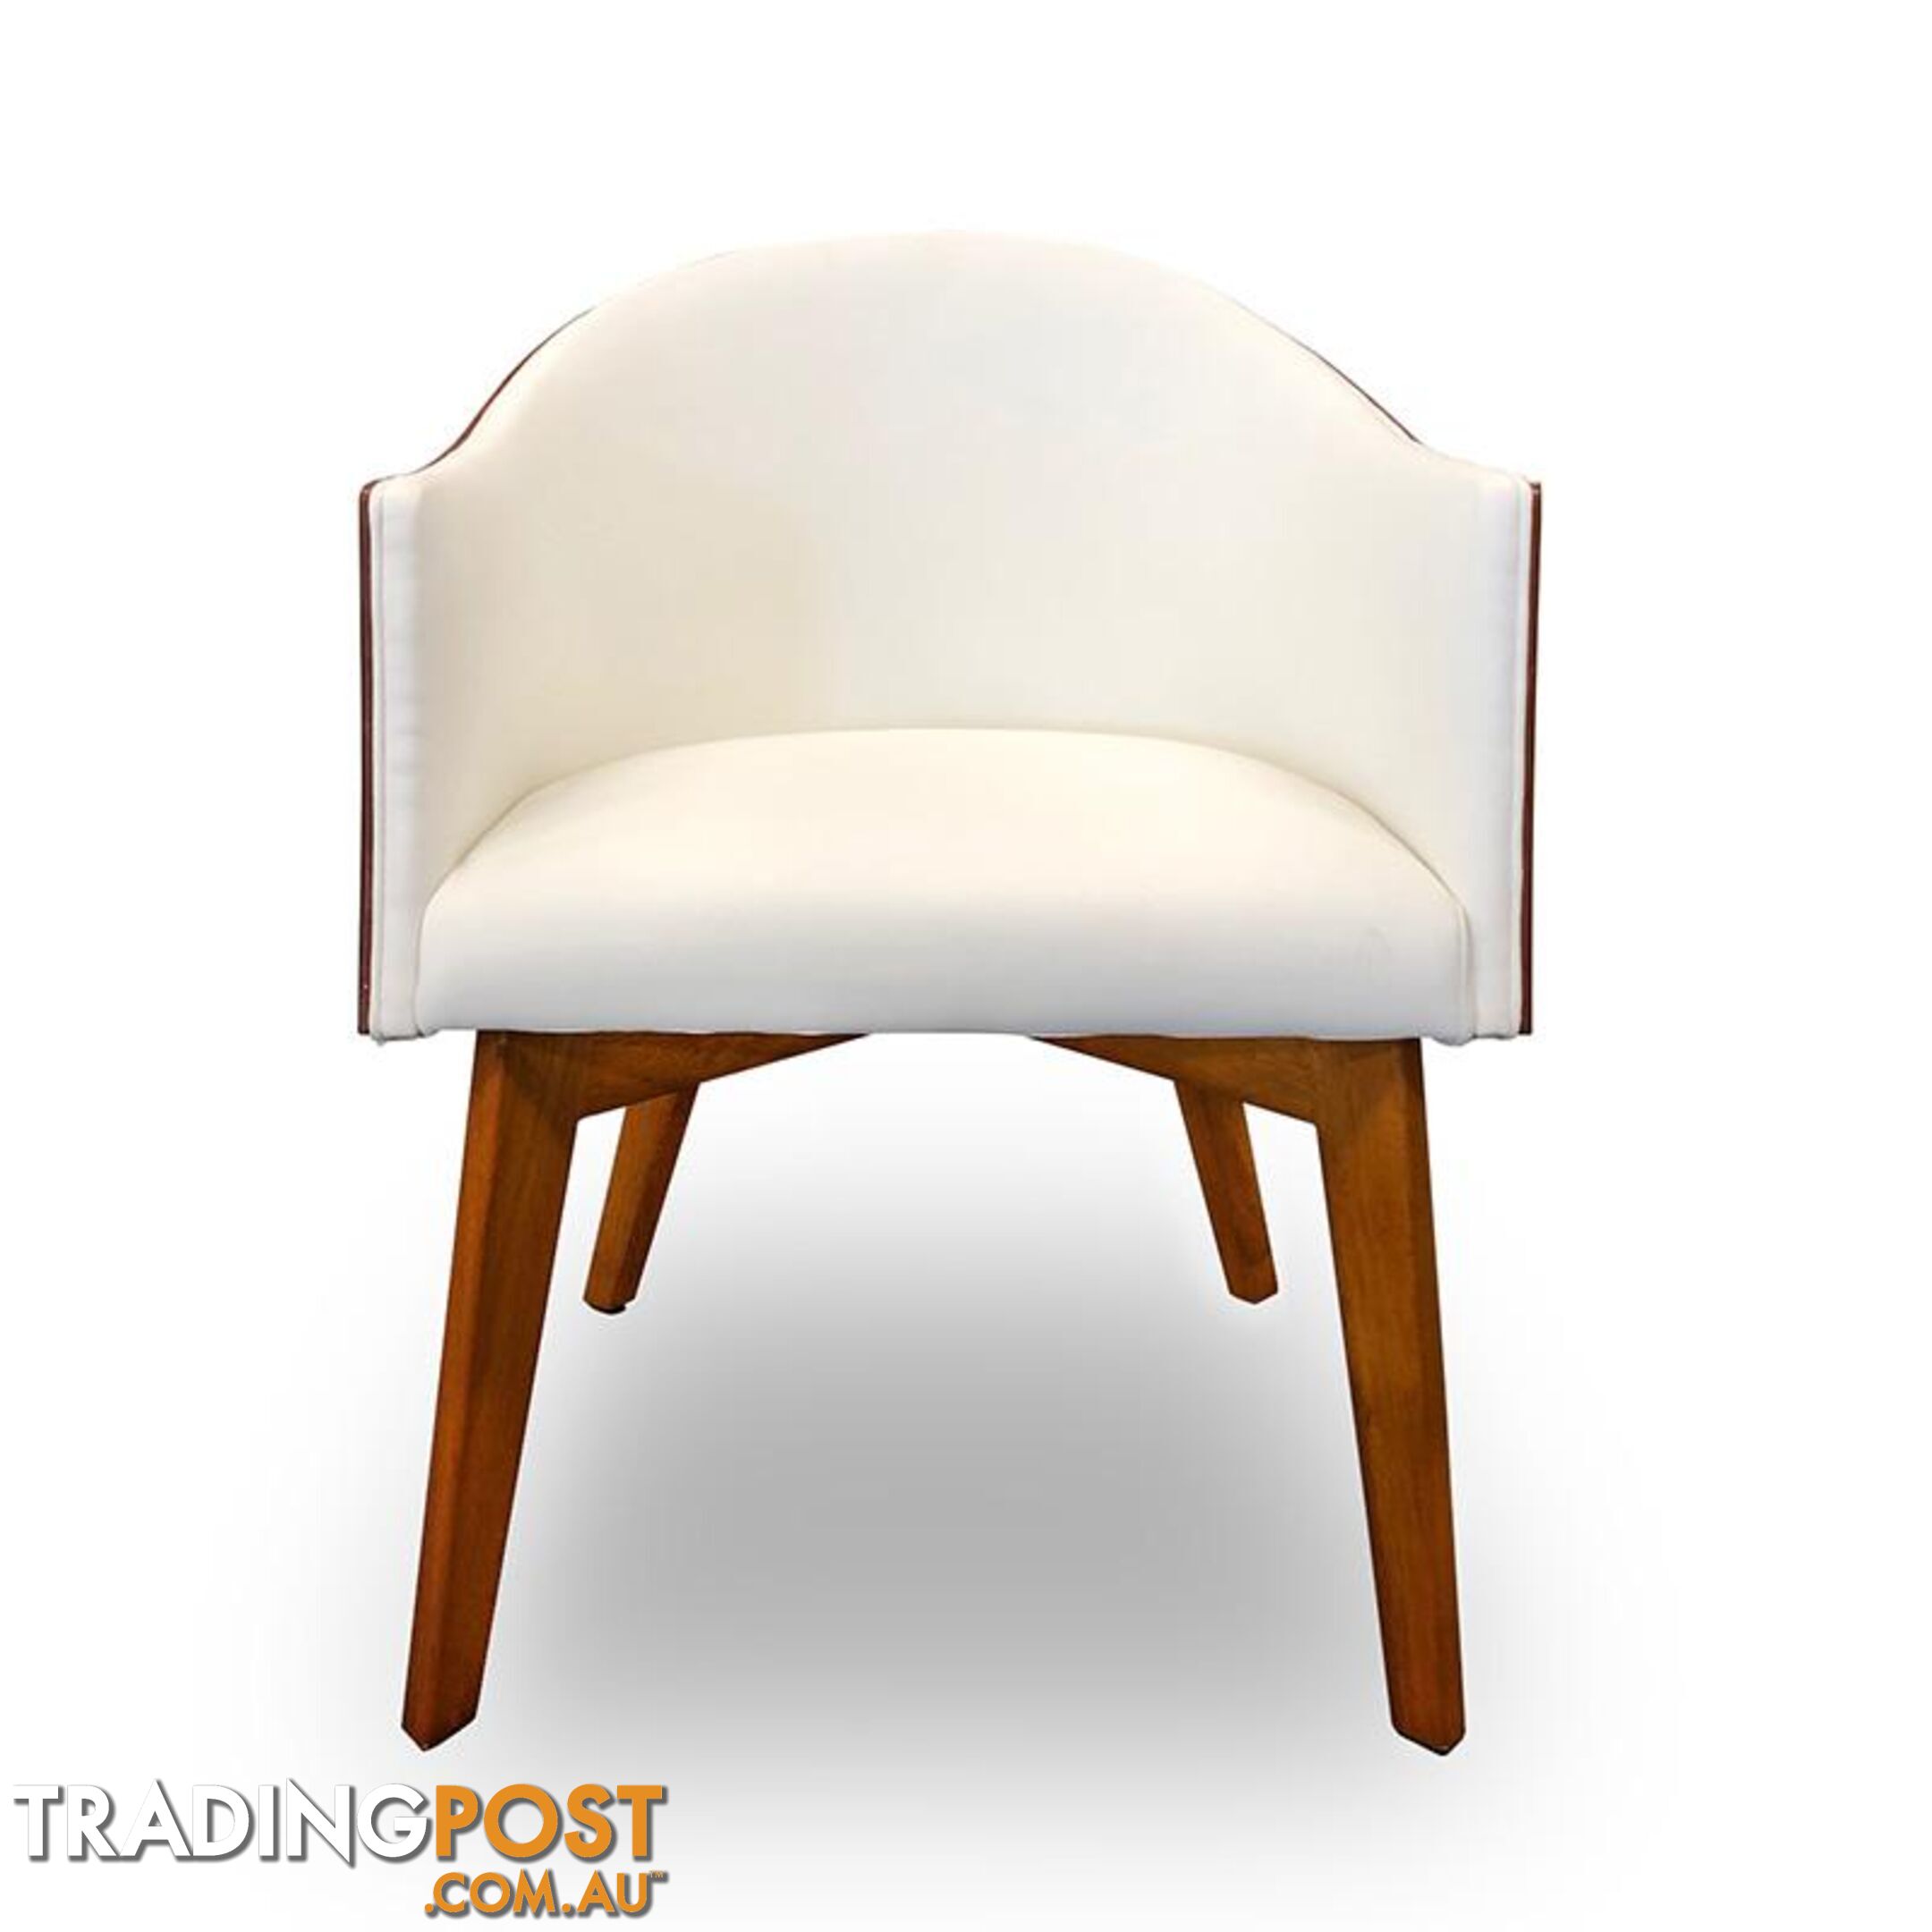 RINGO Office Lounge Chair - Cherry & Ivory - HL-MK2132W6 - 9334719003238